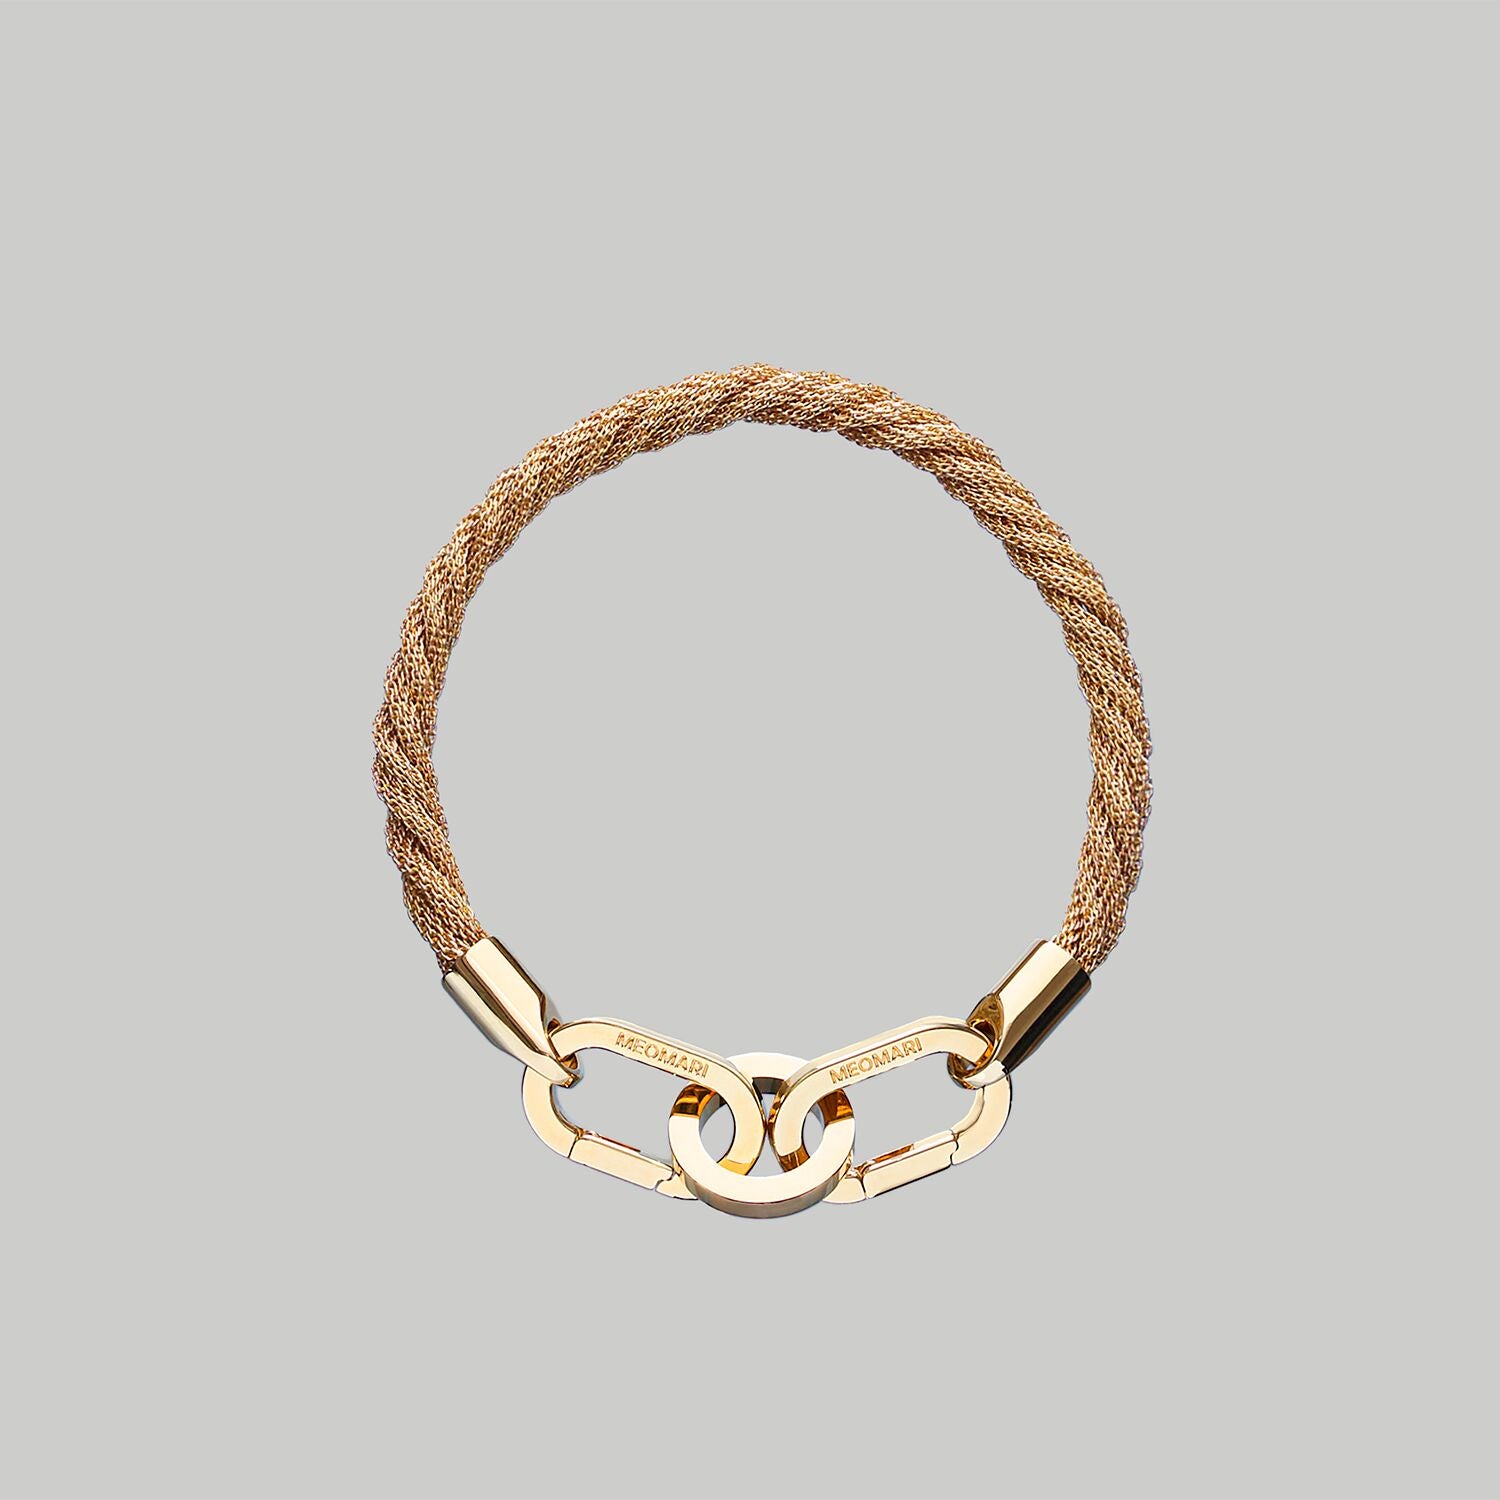 Dog collar in Gold braided